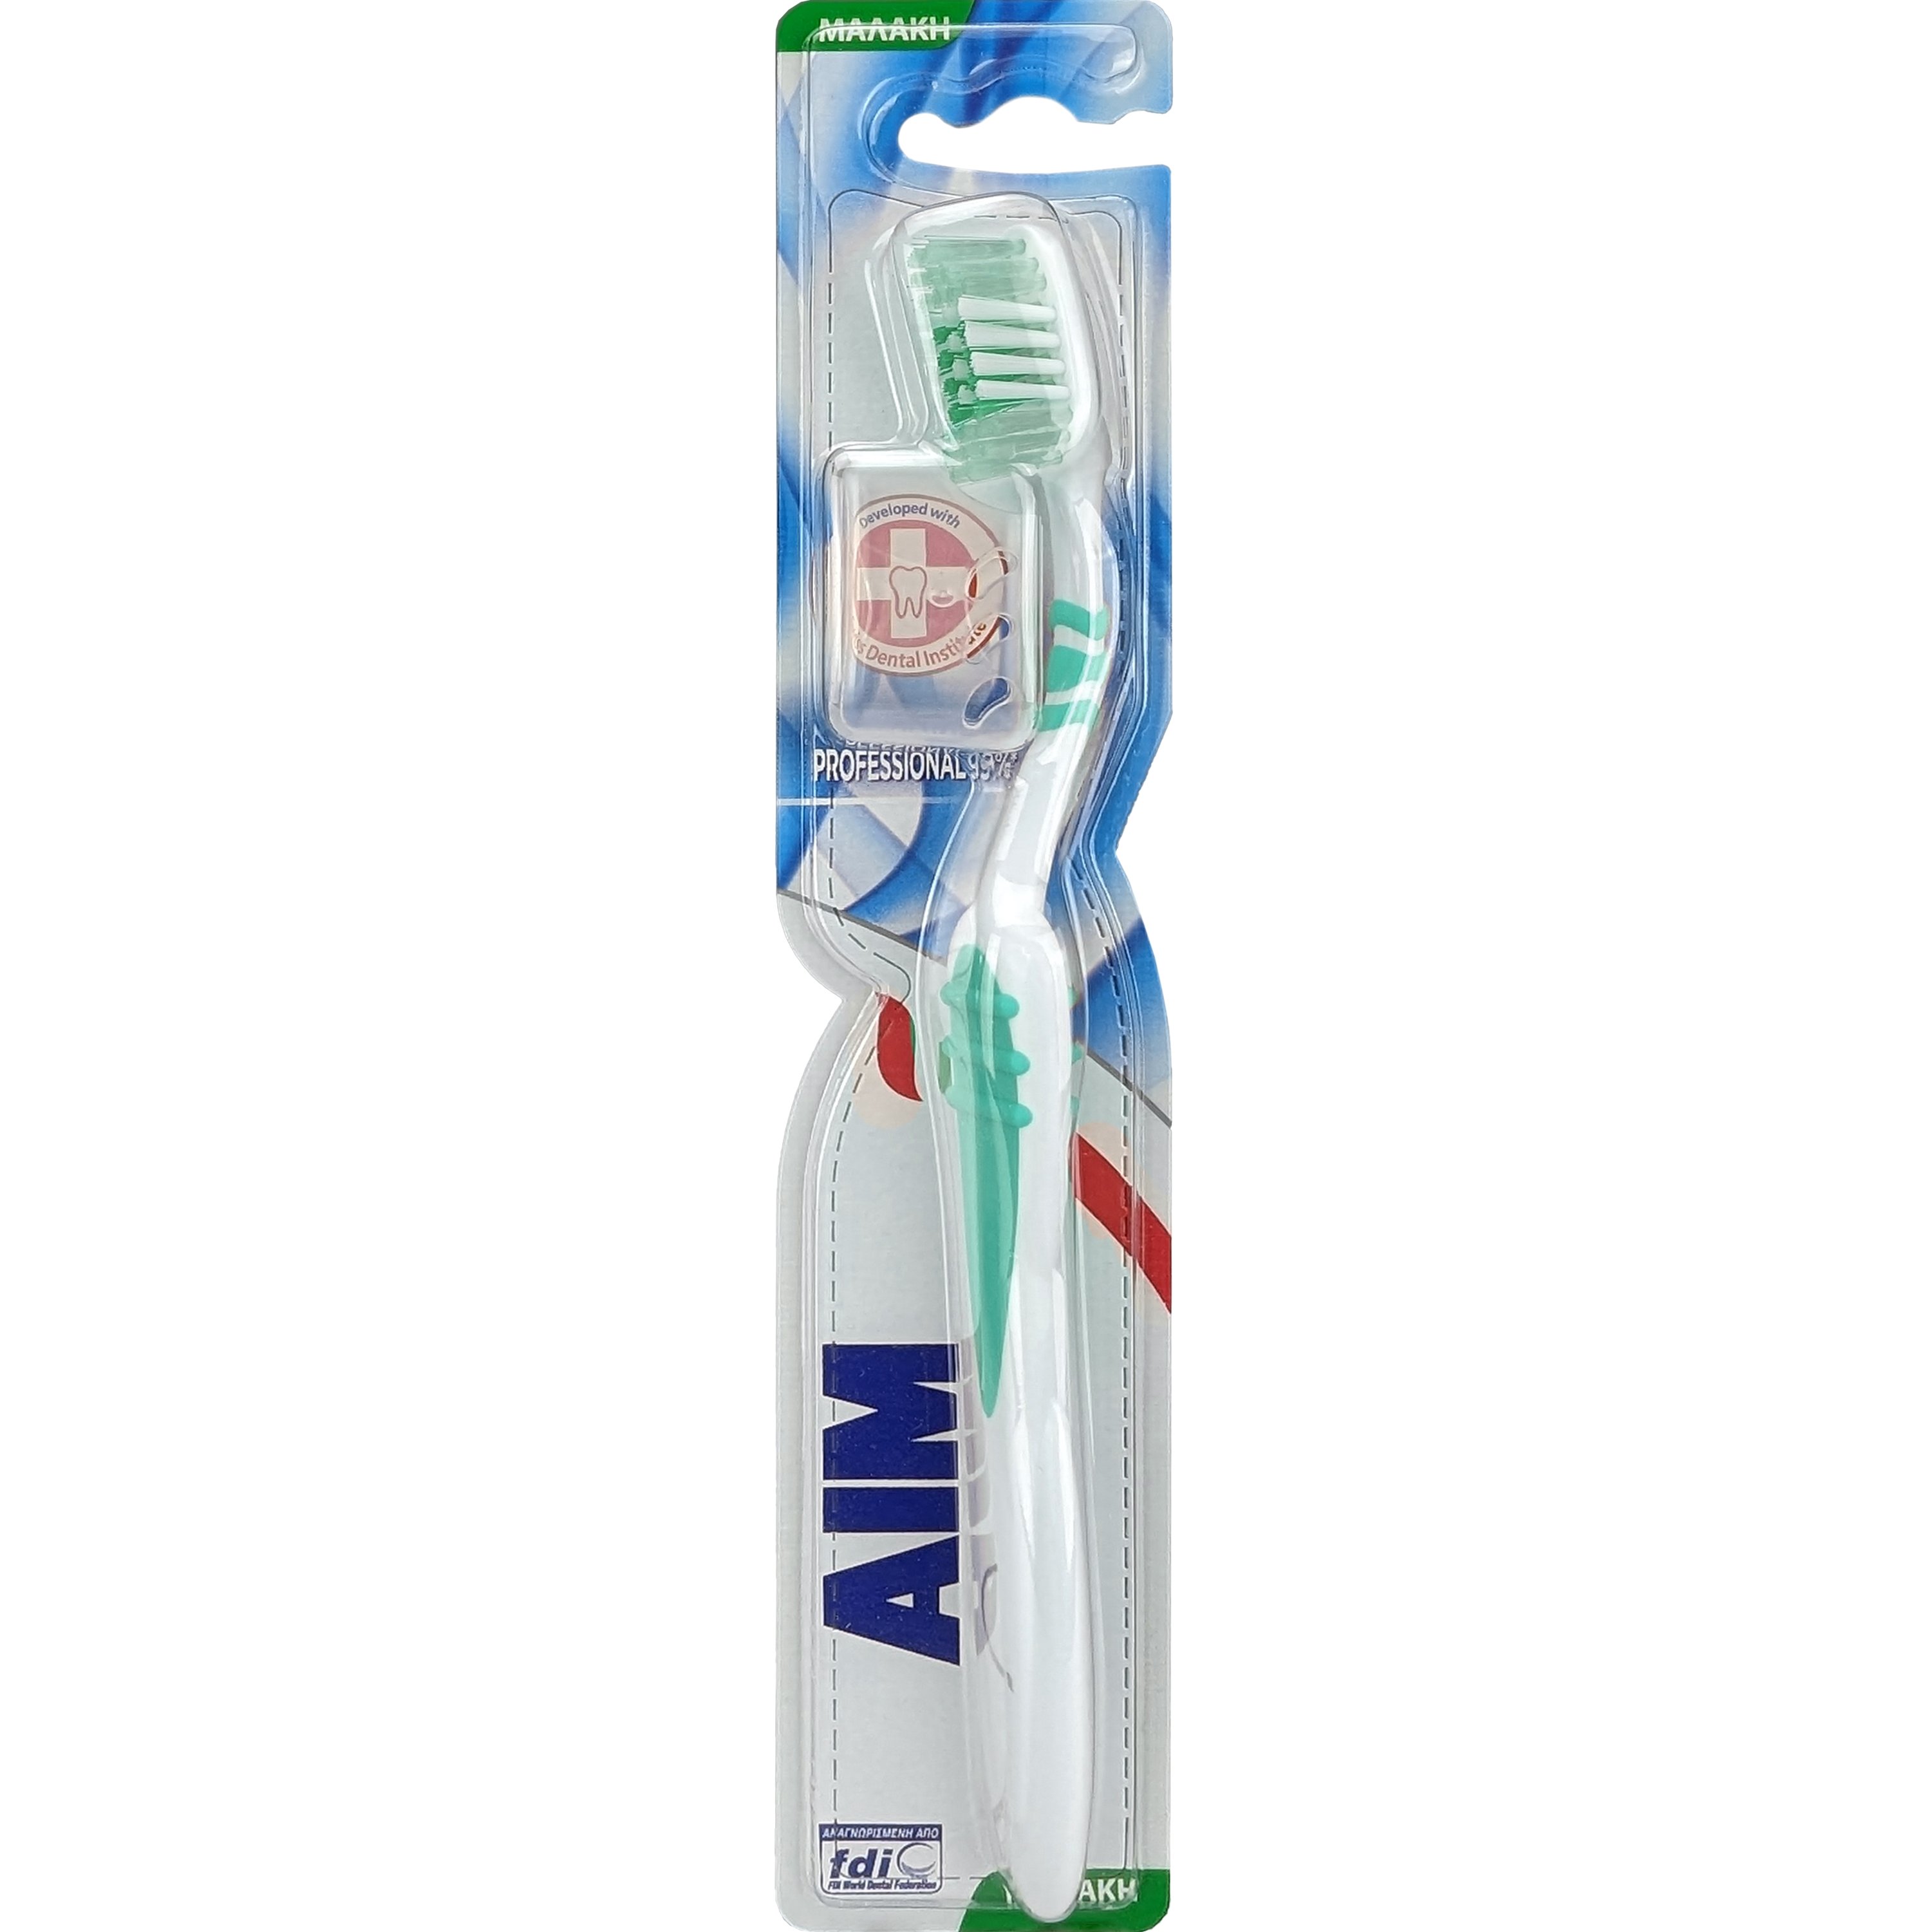 Aim Professional 99% Soft Toothbrush Τιρκουάζ Χειροκίνητη Οδοντόβουρτσα με Μαλακές Ίνες για Έως 99% Απομάκρυνση Υπολειμμάτων 1 Τεμάχιο